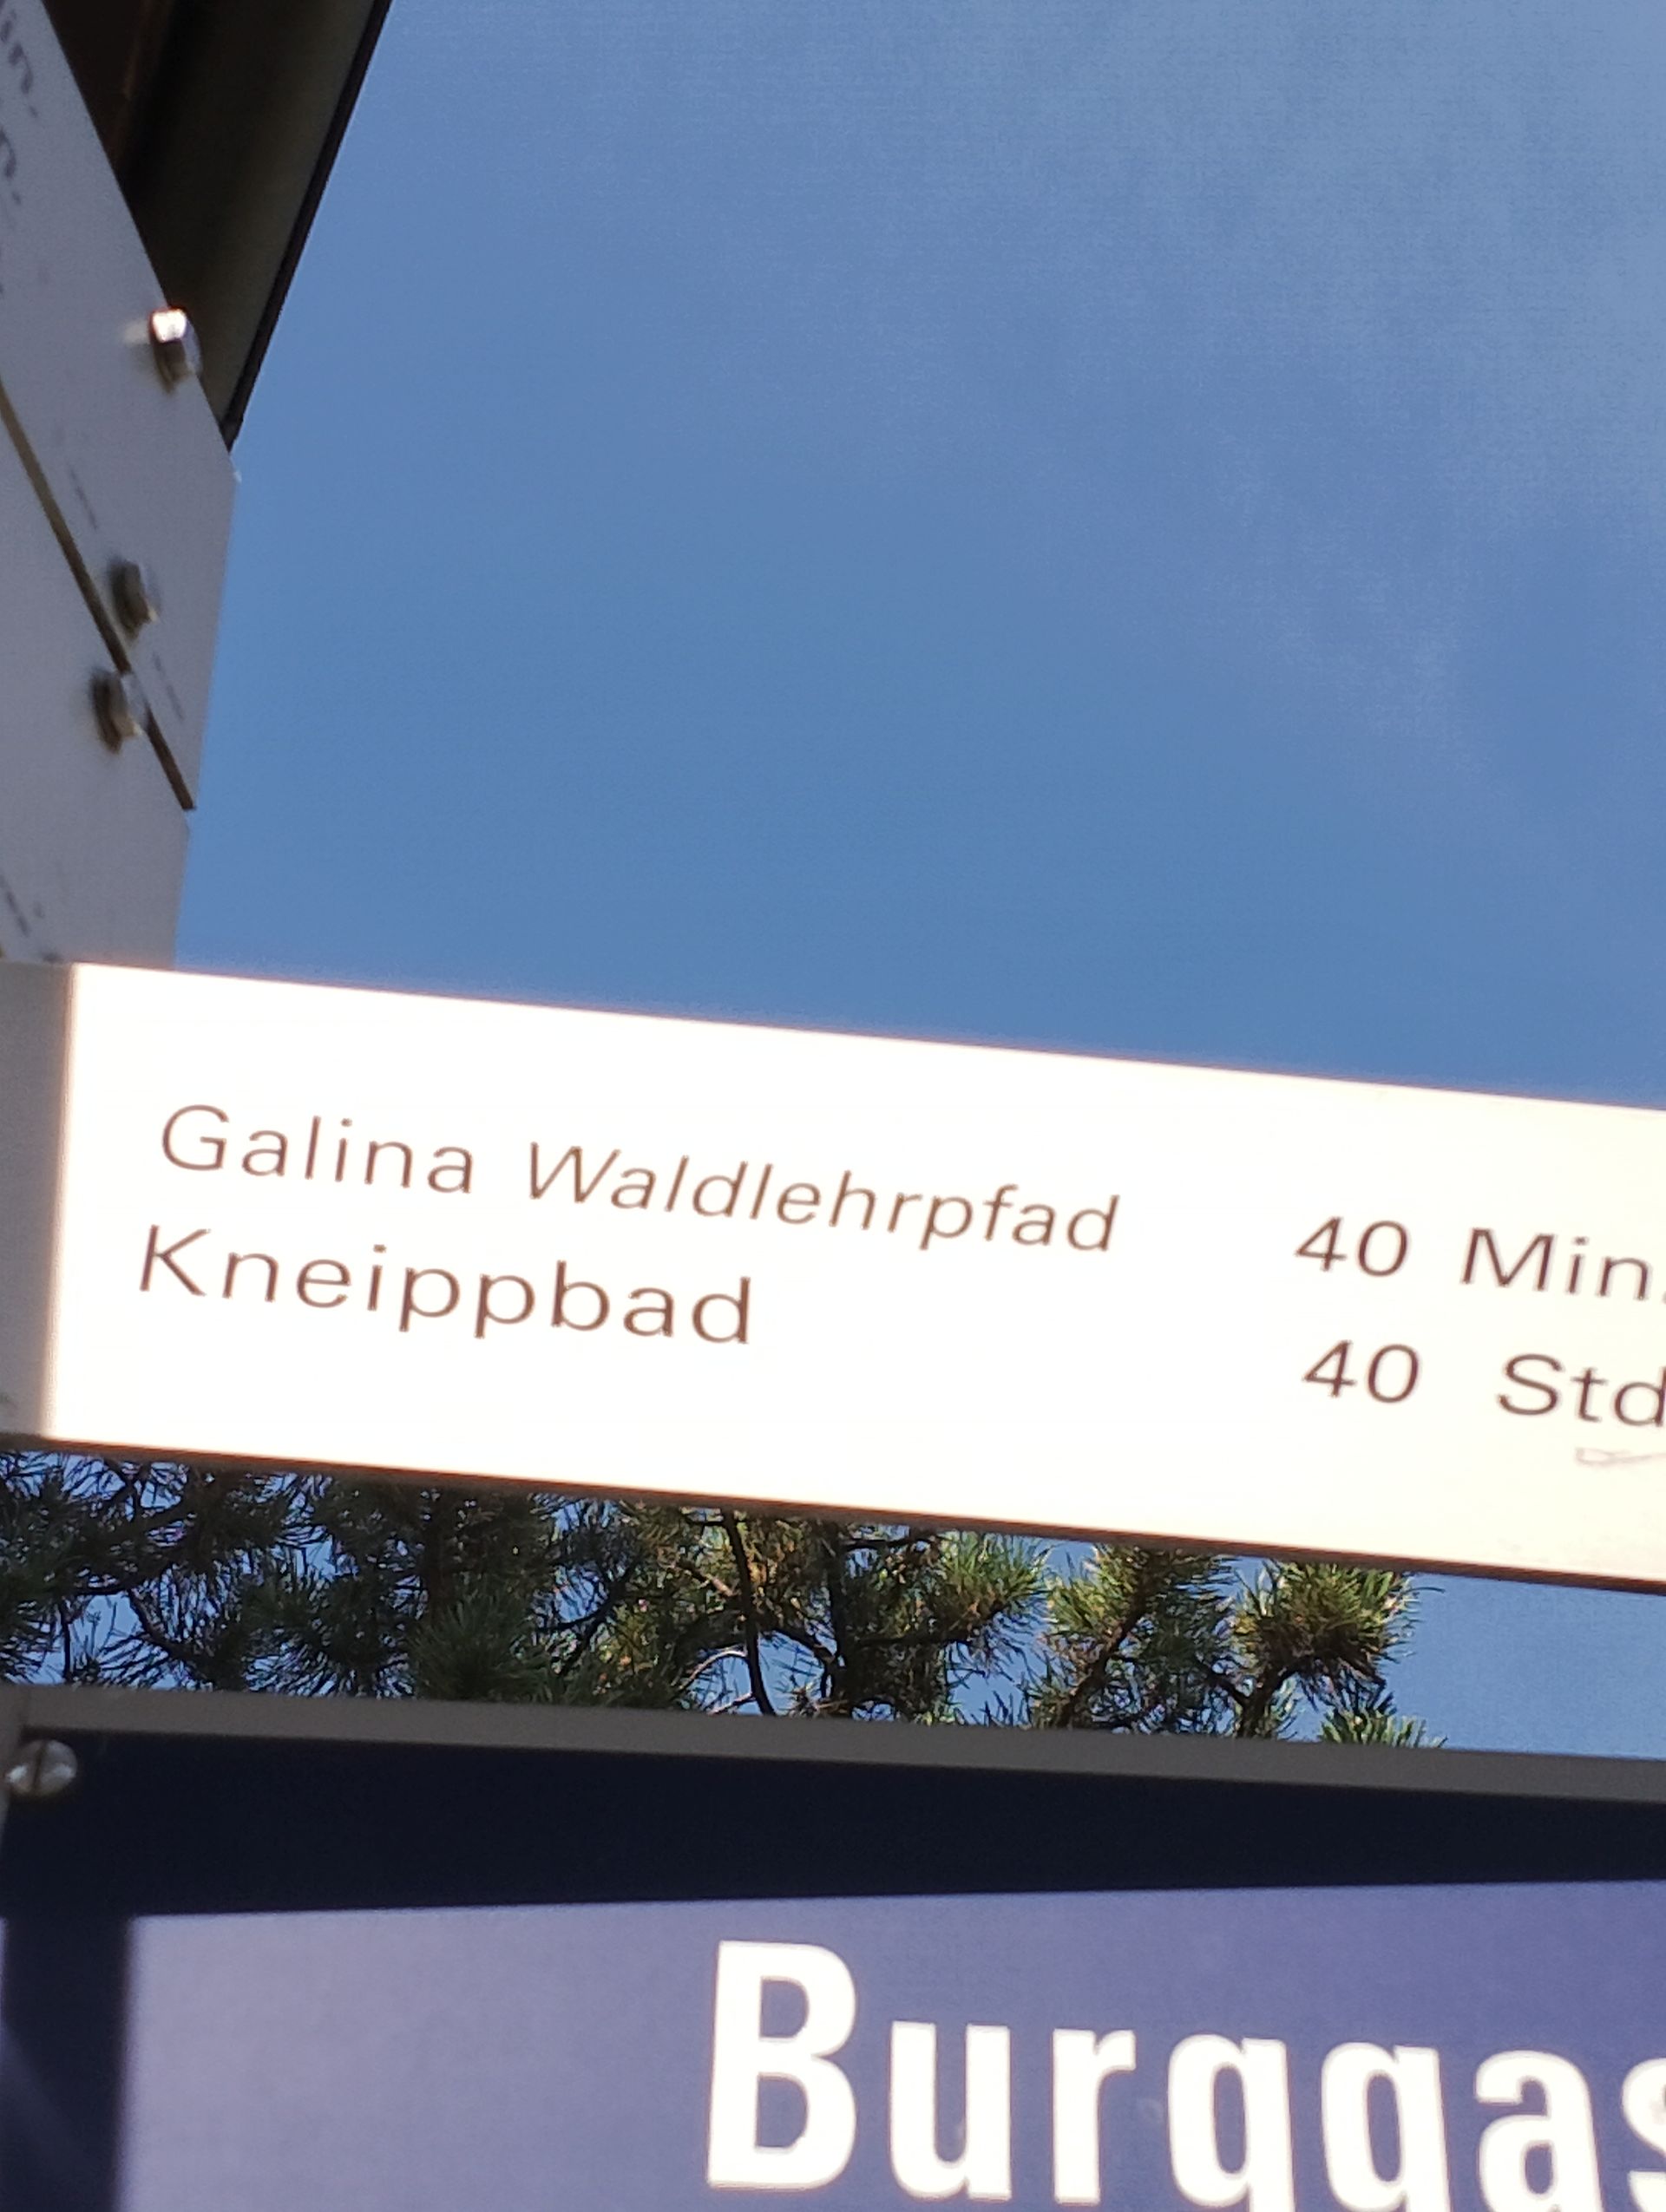 Galina Waldlehrpfad
Kneippbad
40 Min
40 Std
Burggas